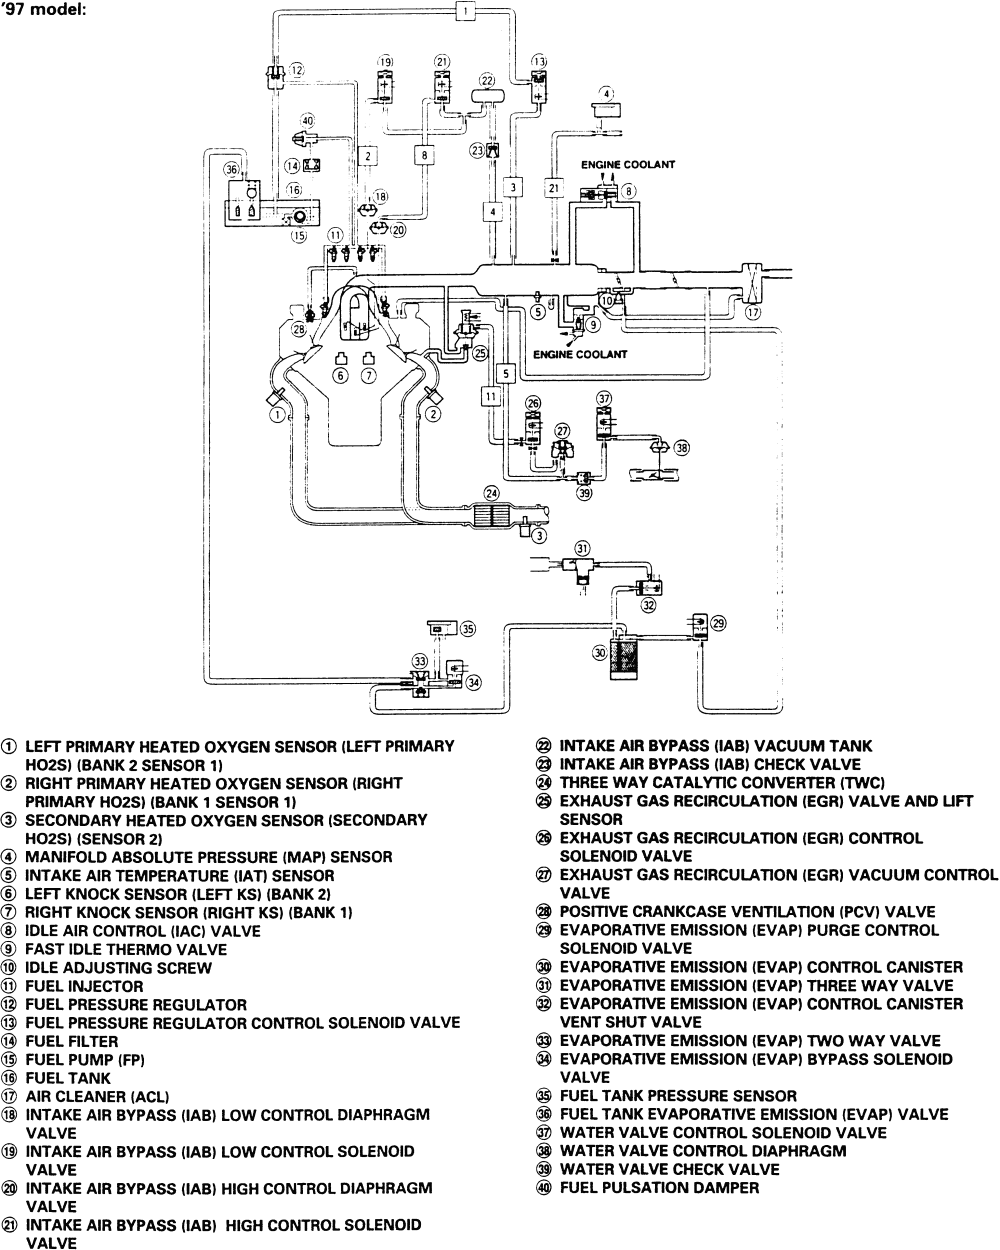 97 Ford Explorer Engine Diagram - Wiring Diagram Networks